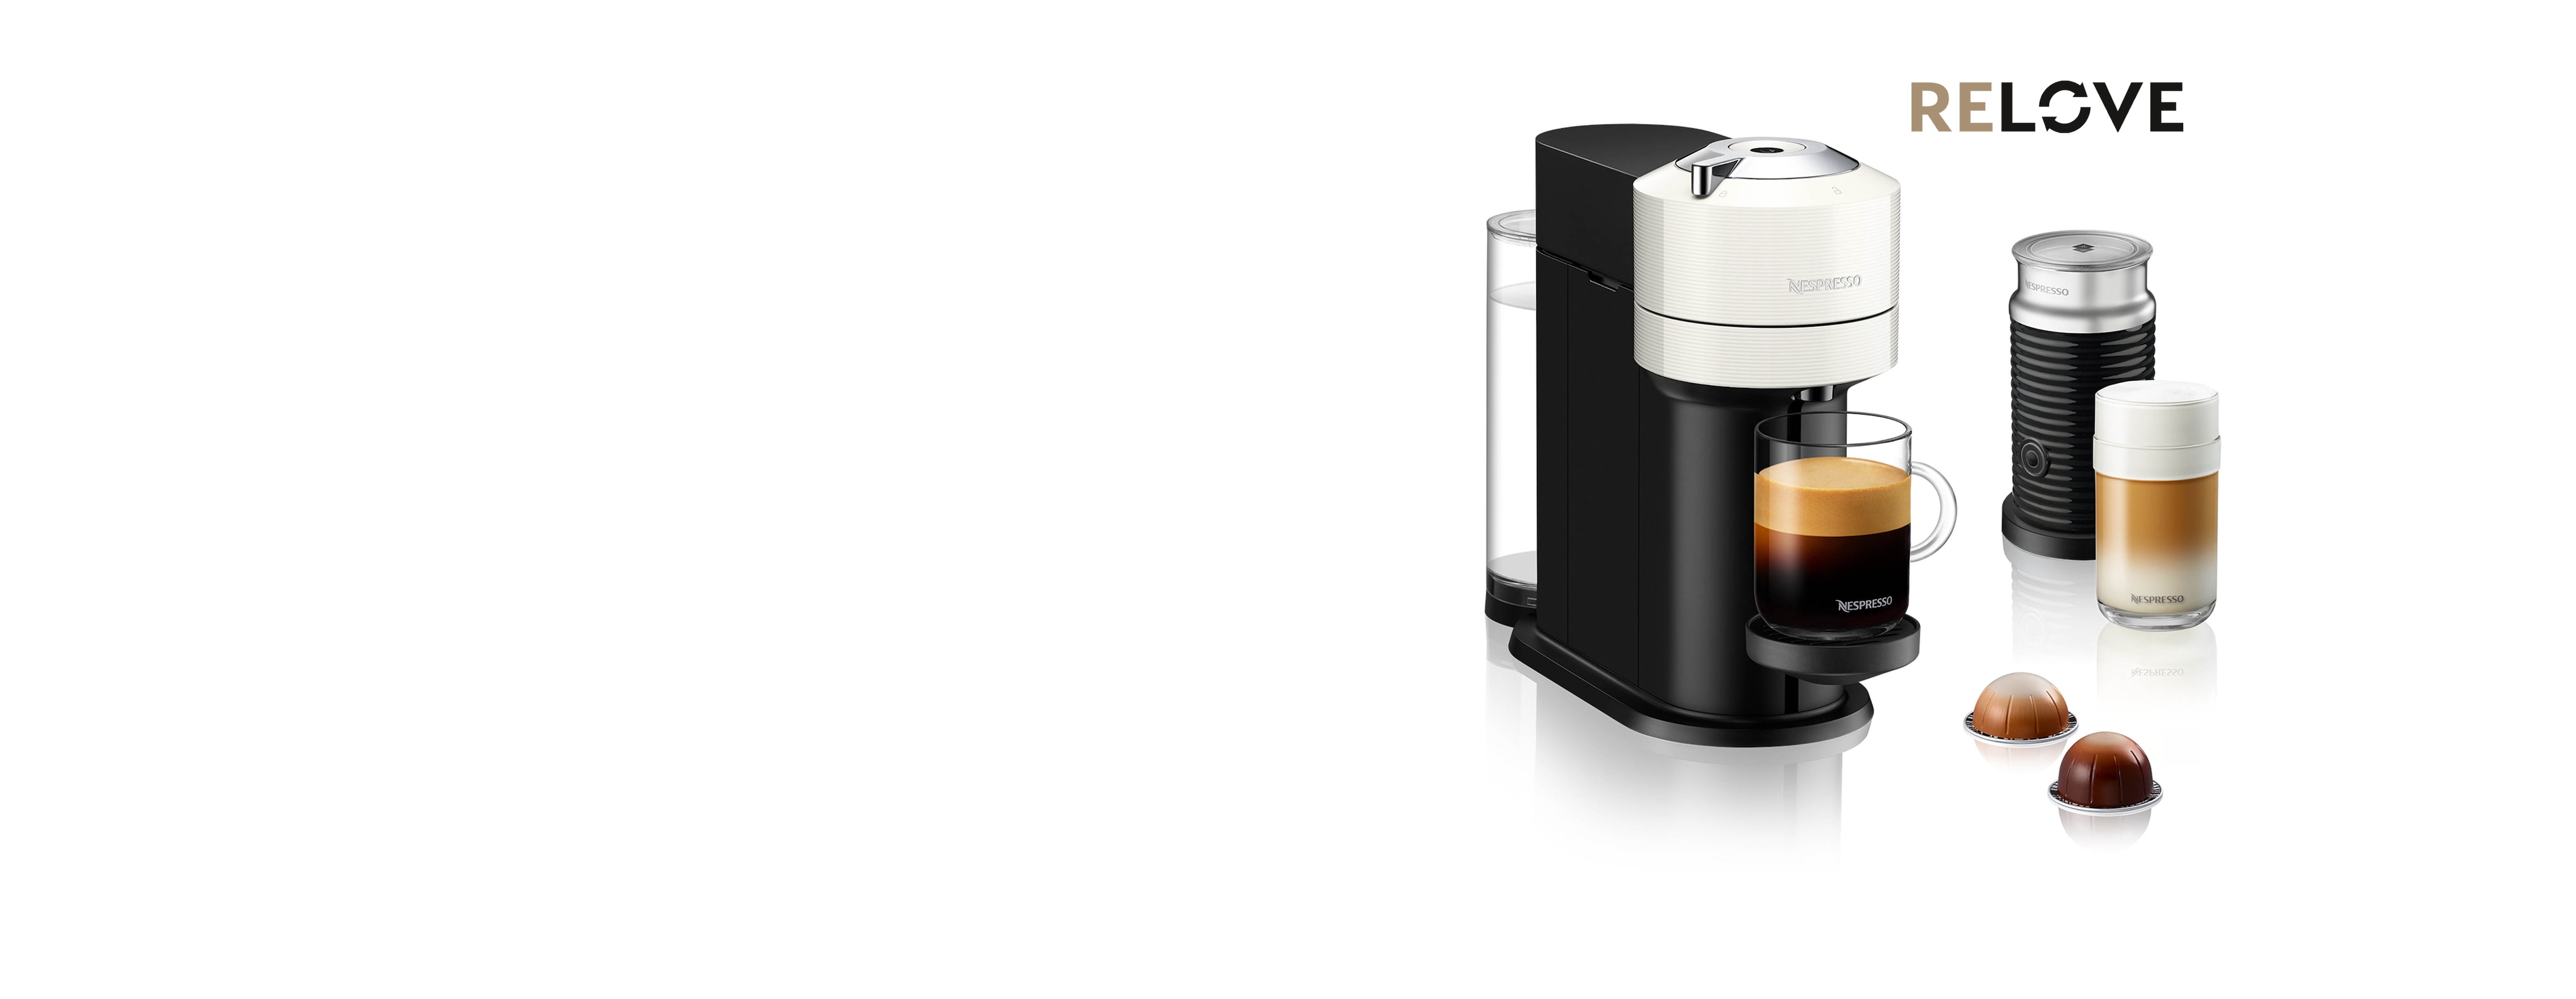 Nespresso Vertuo Next Coffee and Espresso Machine Bundle with